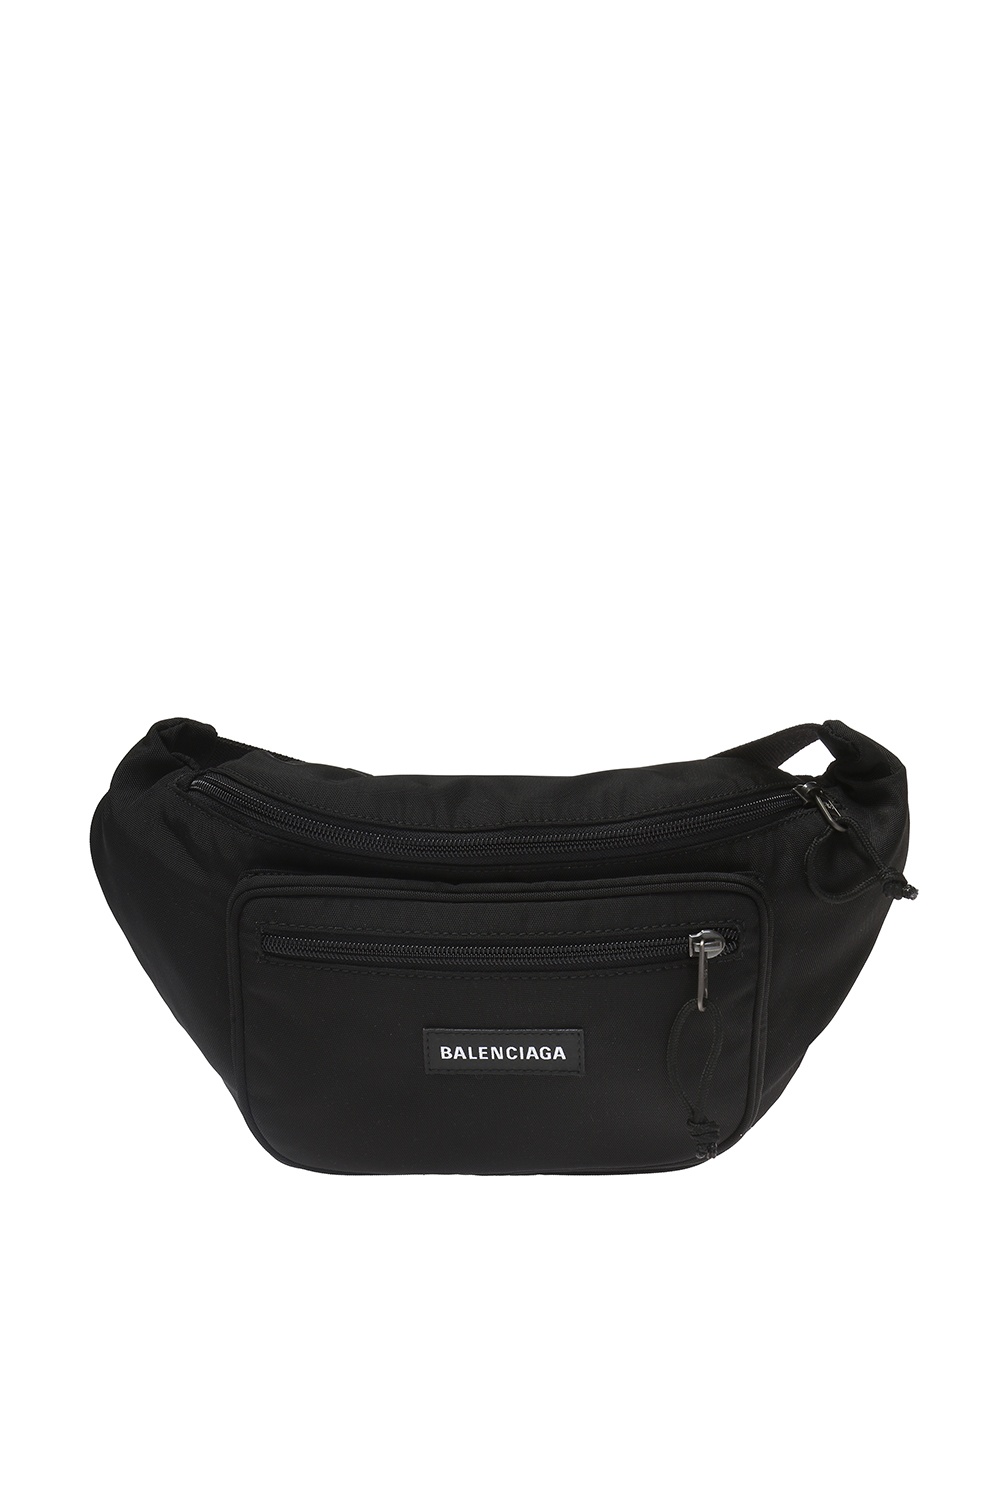 balenciaga explorer belt bag price